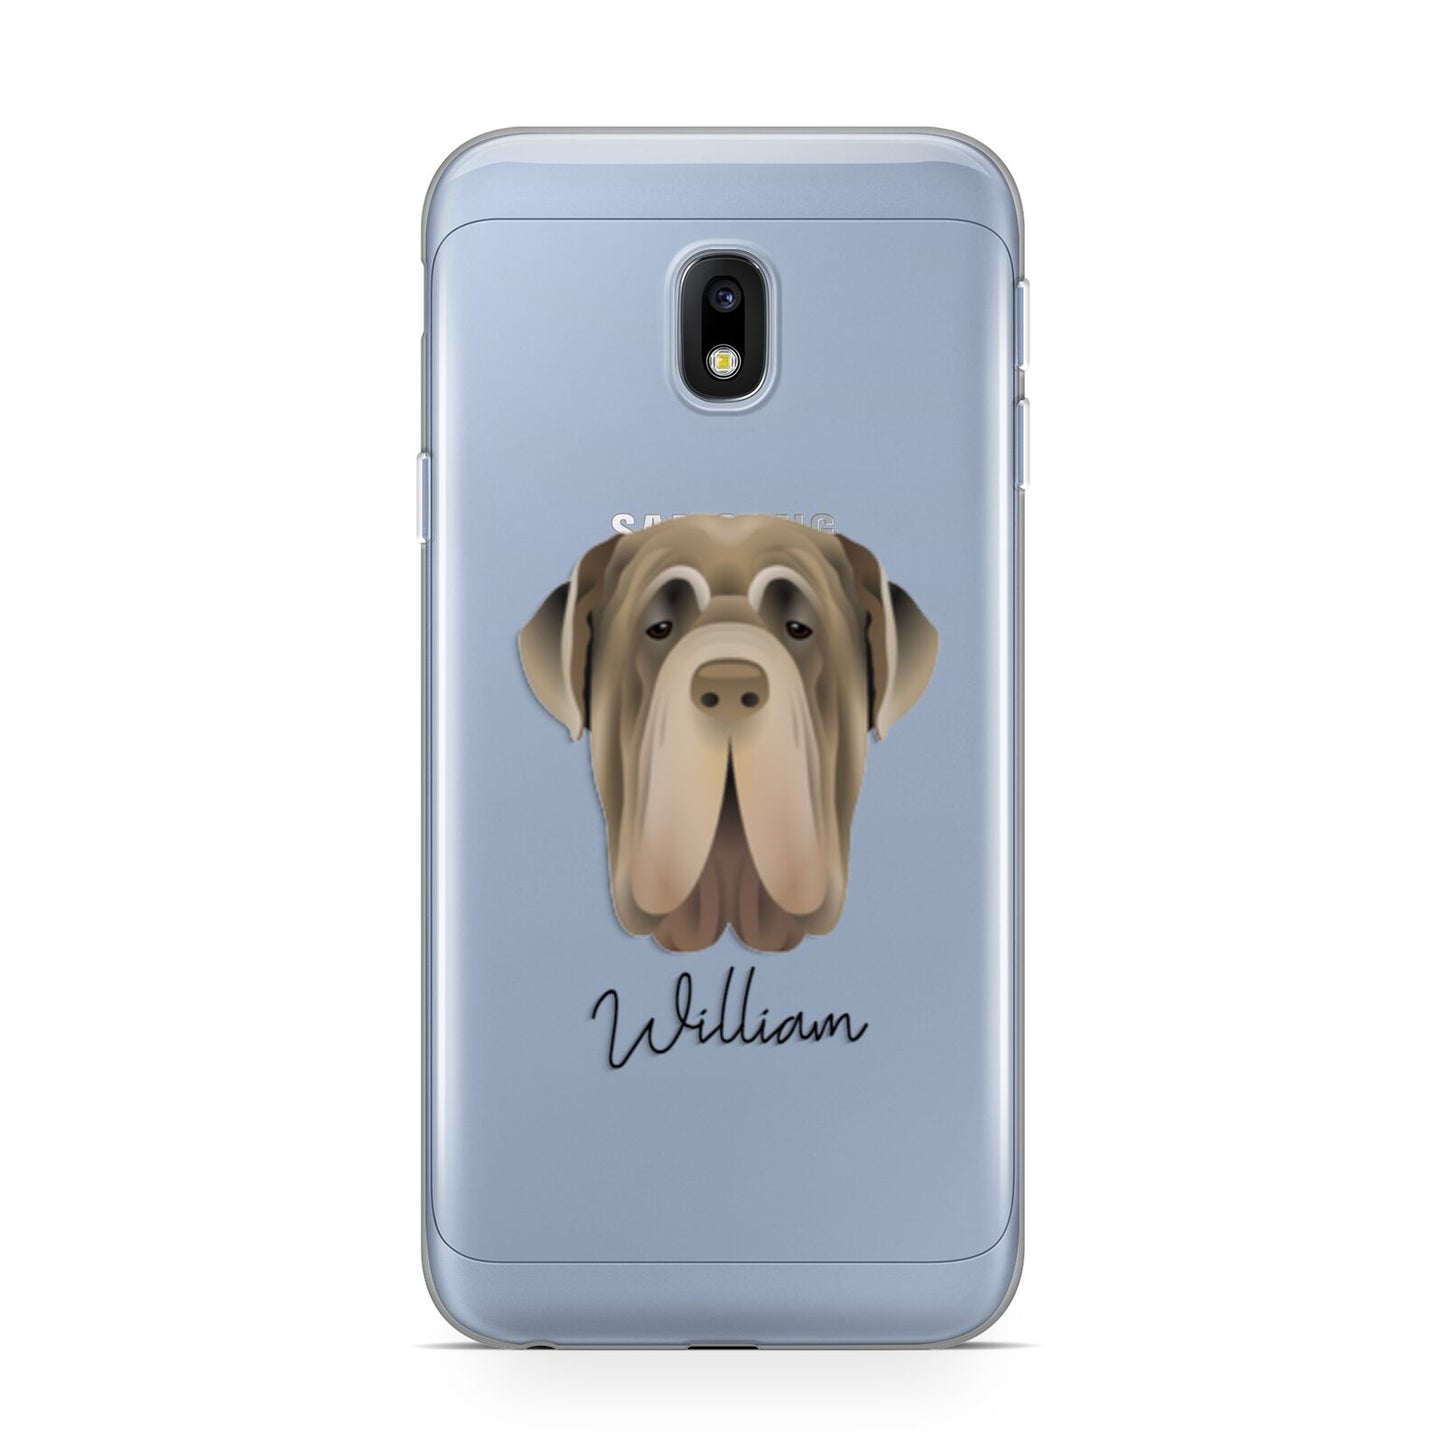 Neapolitan Mastiff Personalised Samsung Galaxy J3 2017 Case